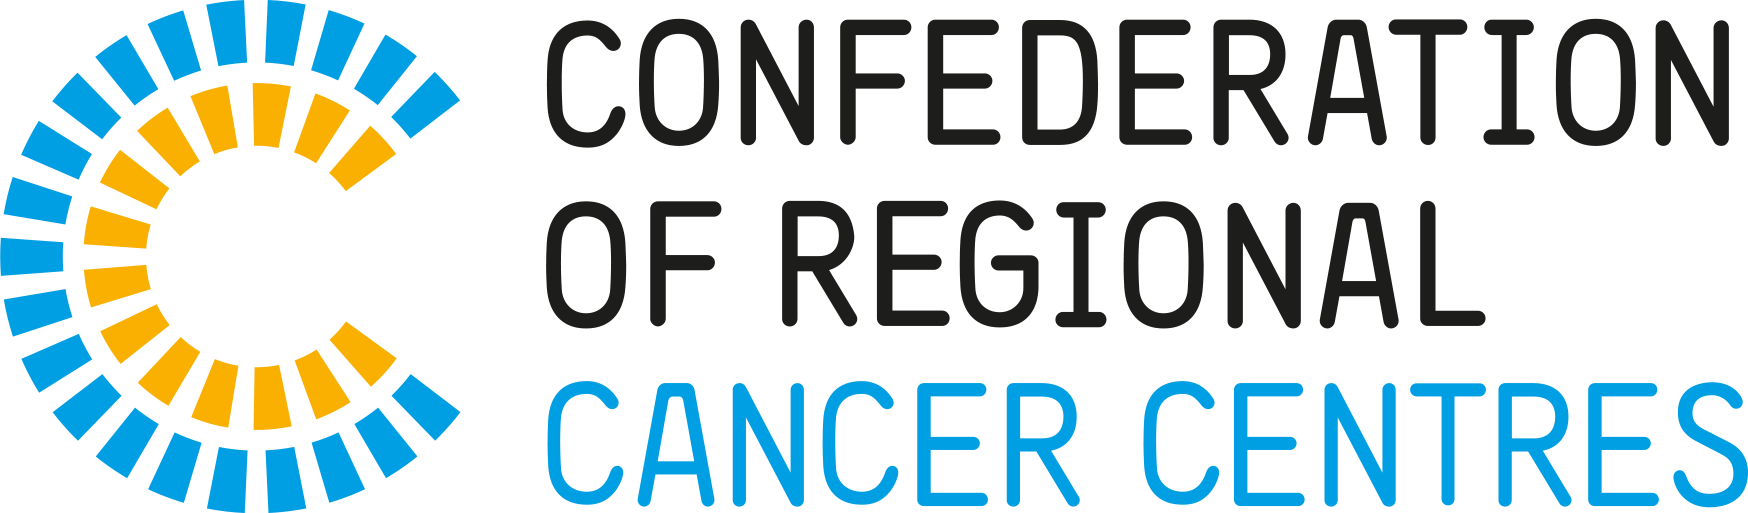 Regionala cancercentrum i samverkan (RCC)